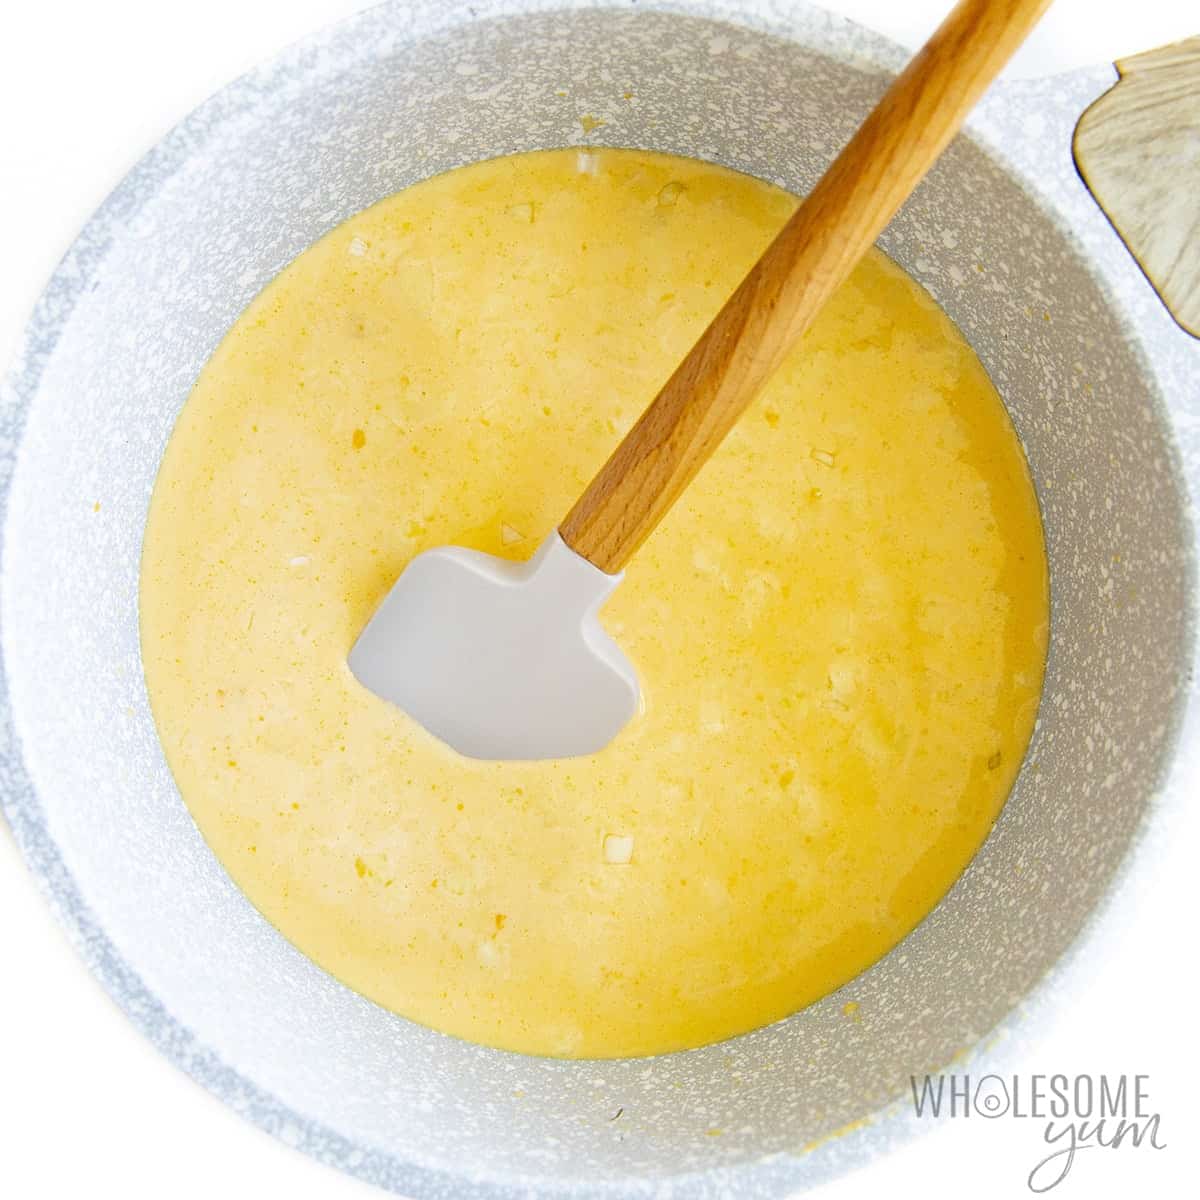 Cheese sauce in a saucepan.